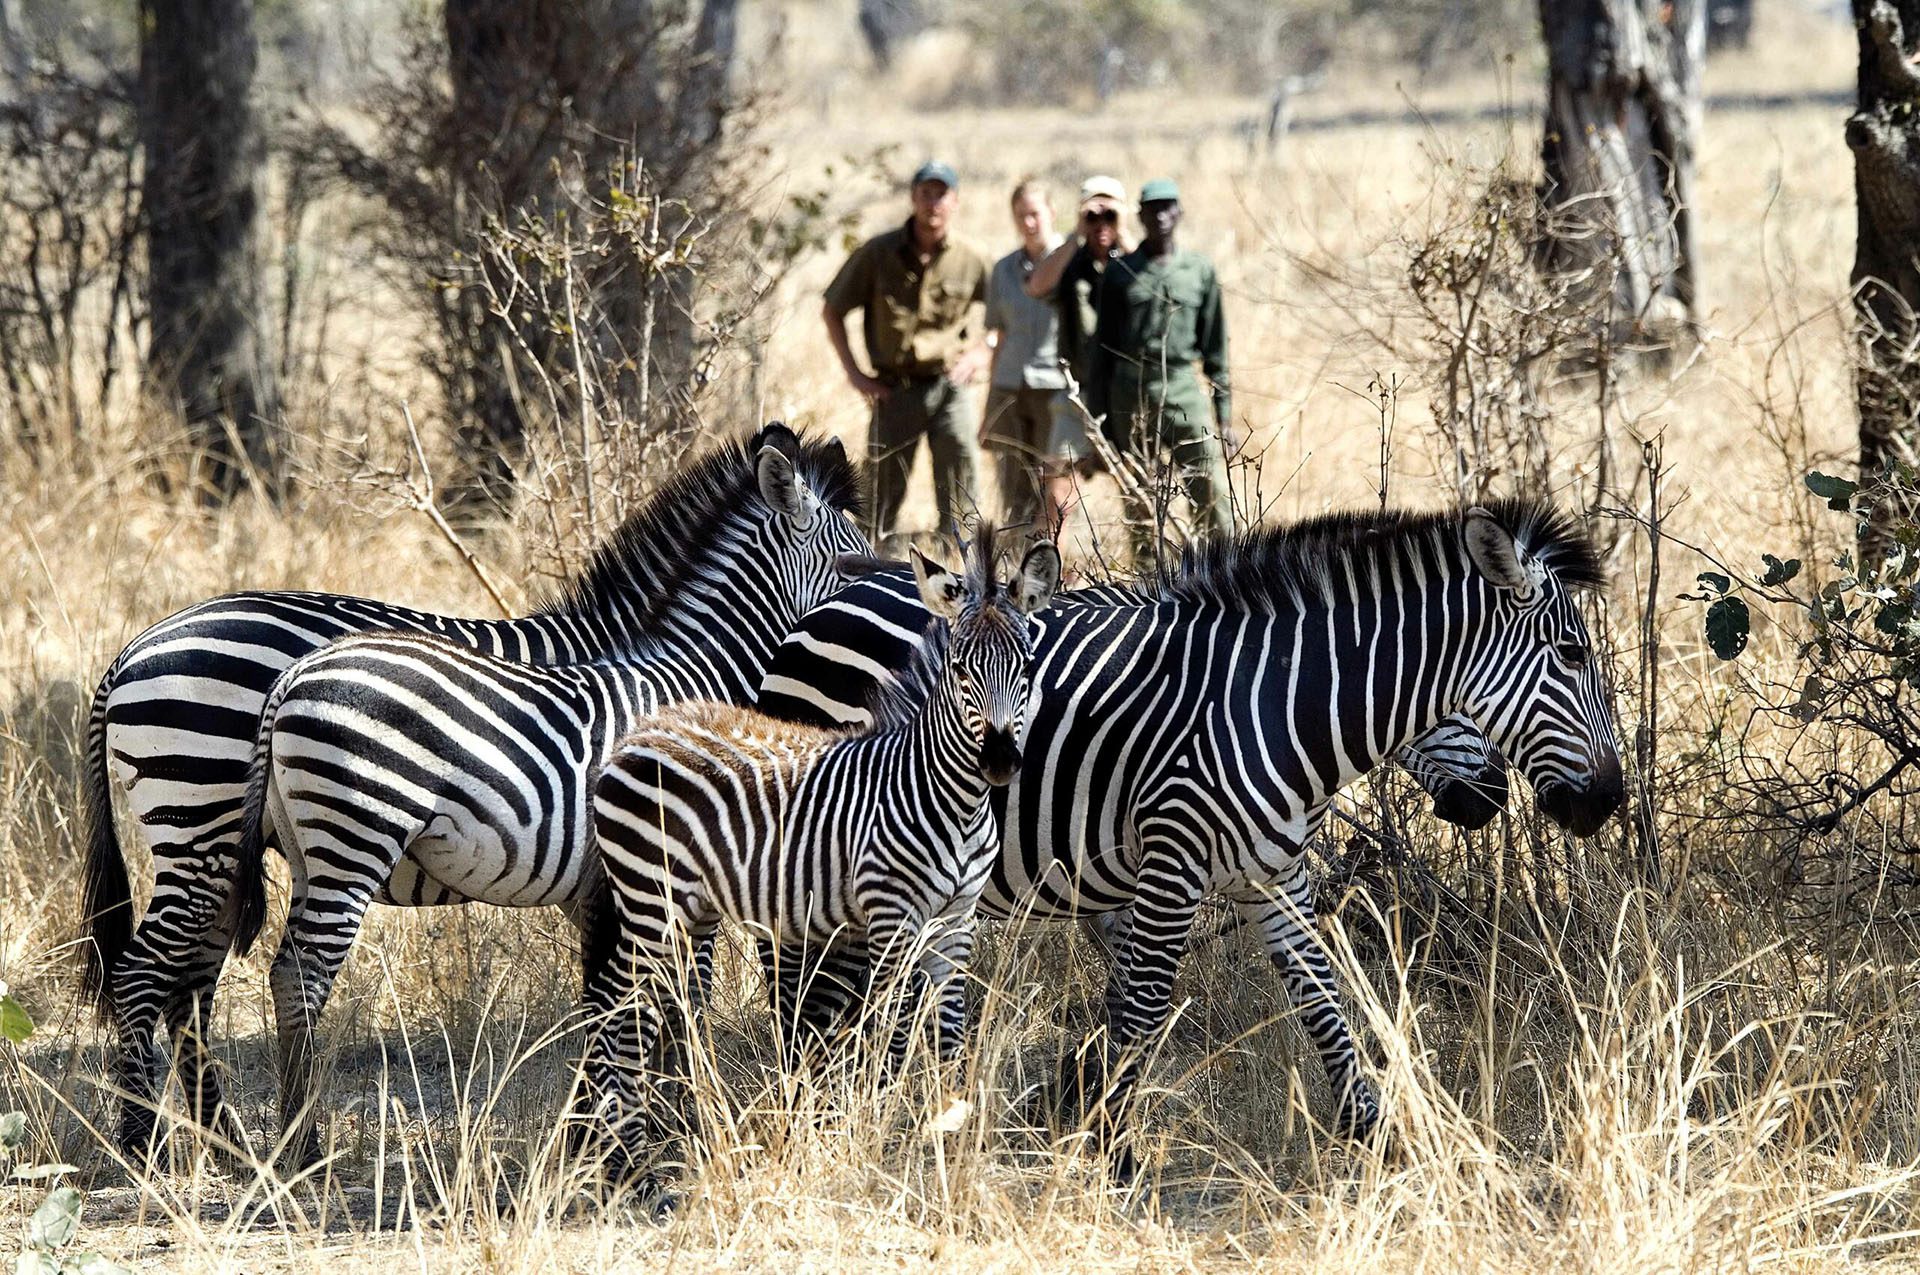 a herd of zebra walking across a dry grass covered field.